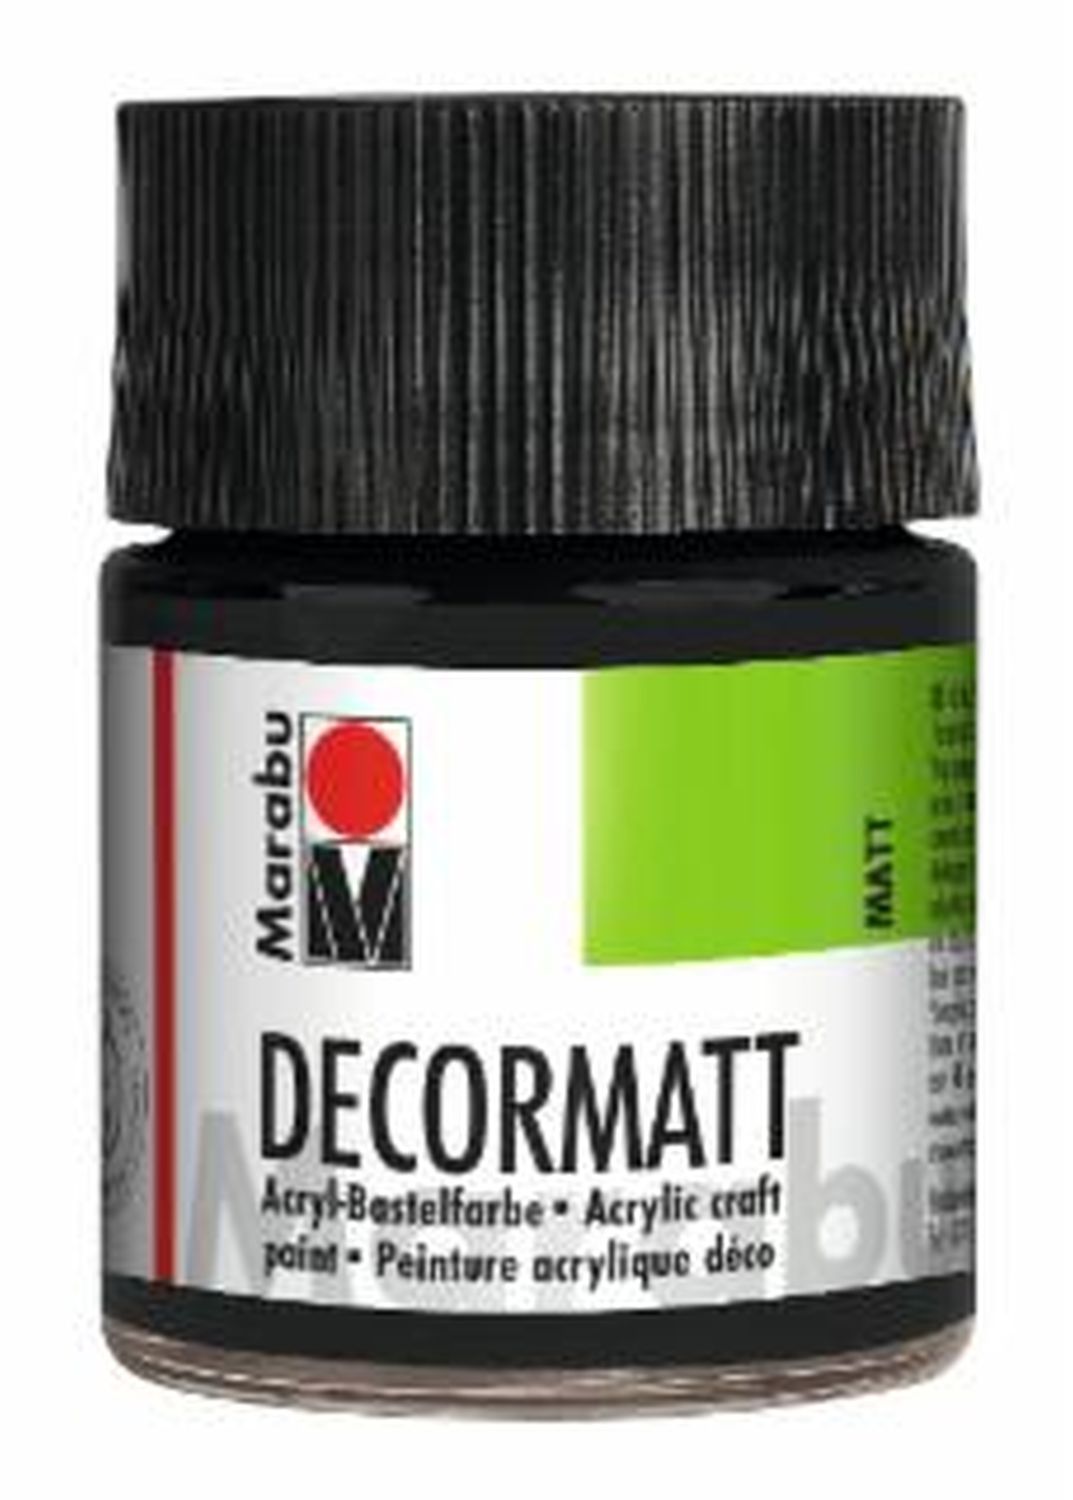 Decormatt Acryl - Schwarz 073, 50 ml